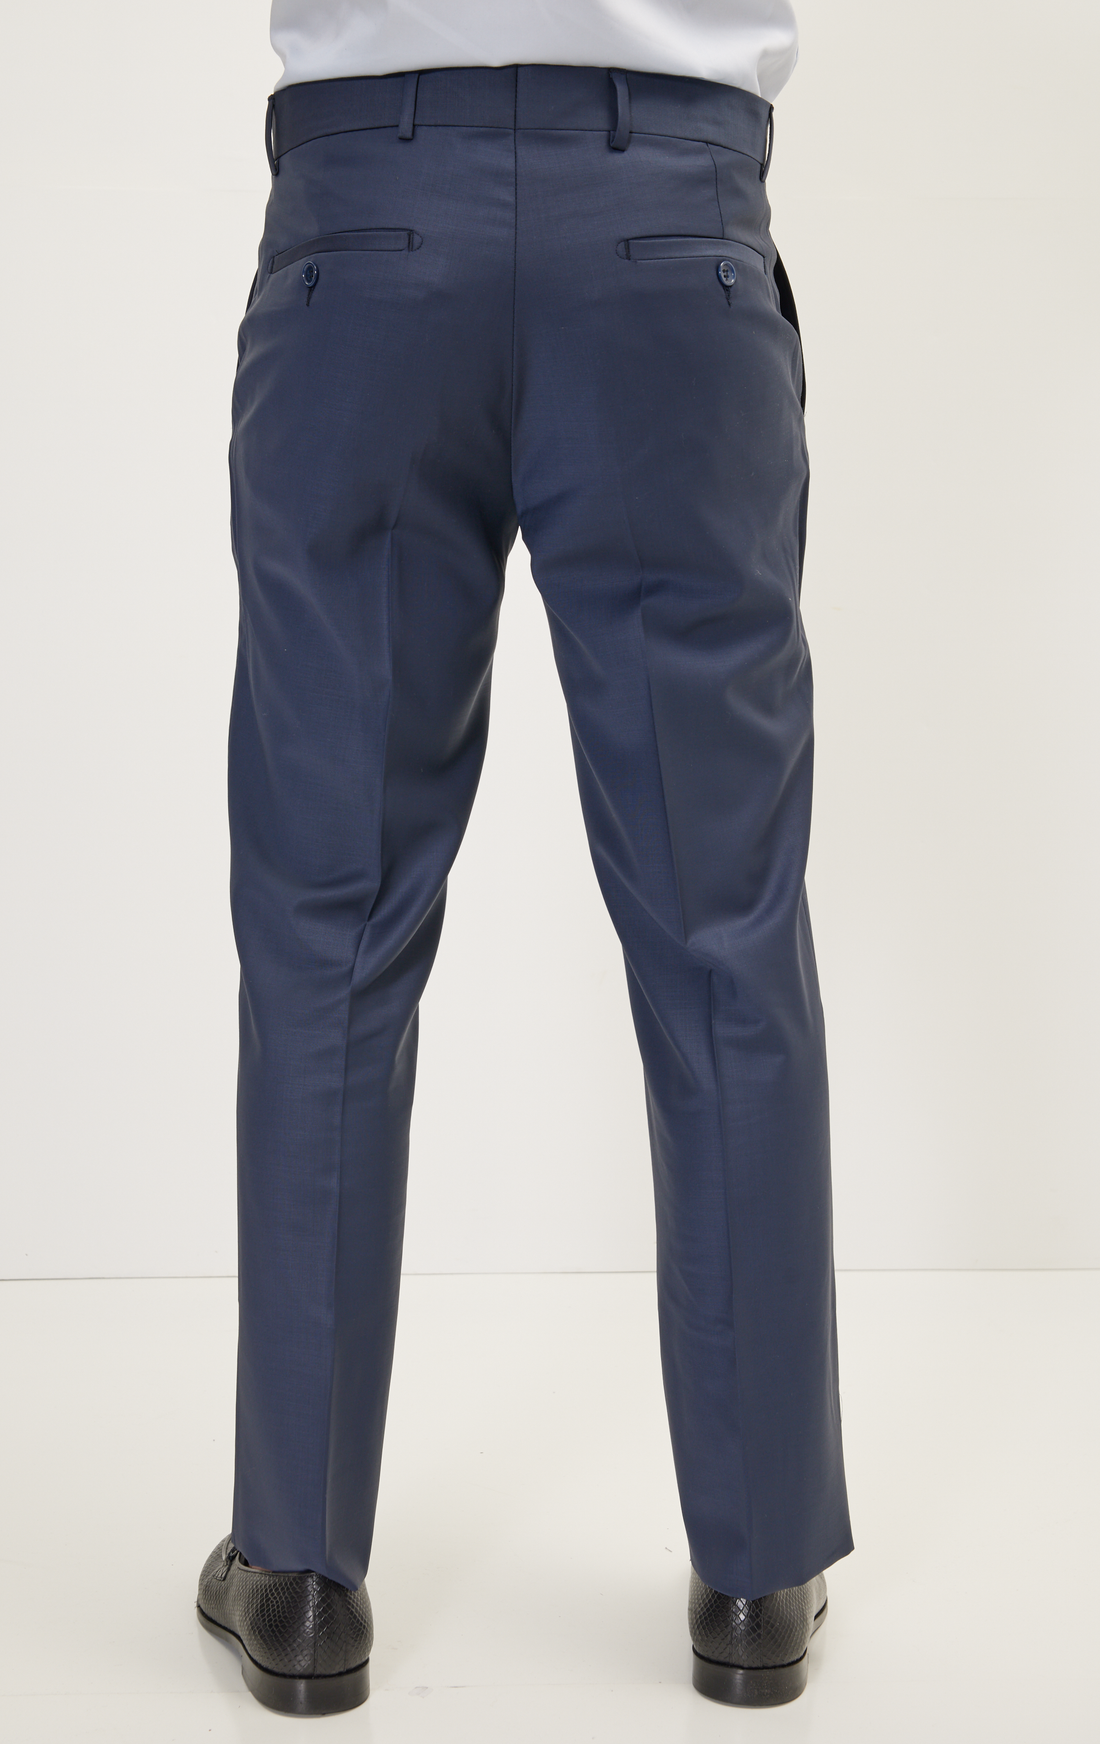 Pantaloni eleganti in lana merino - Blu scuro